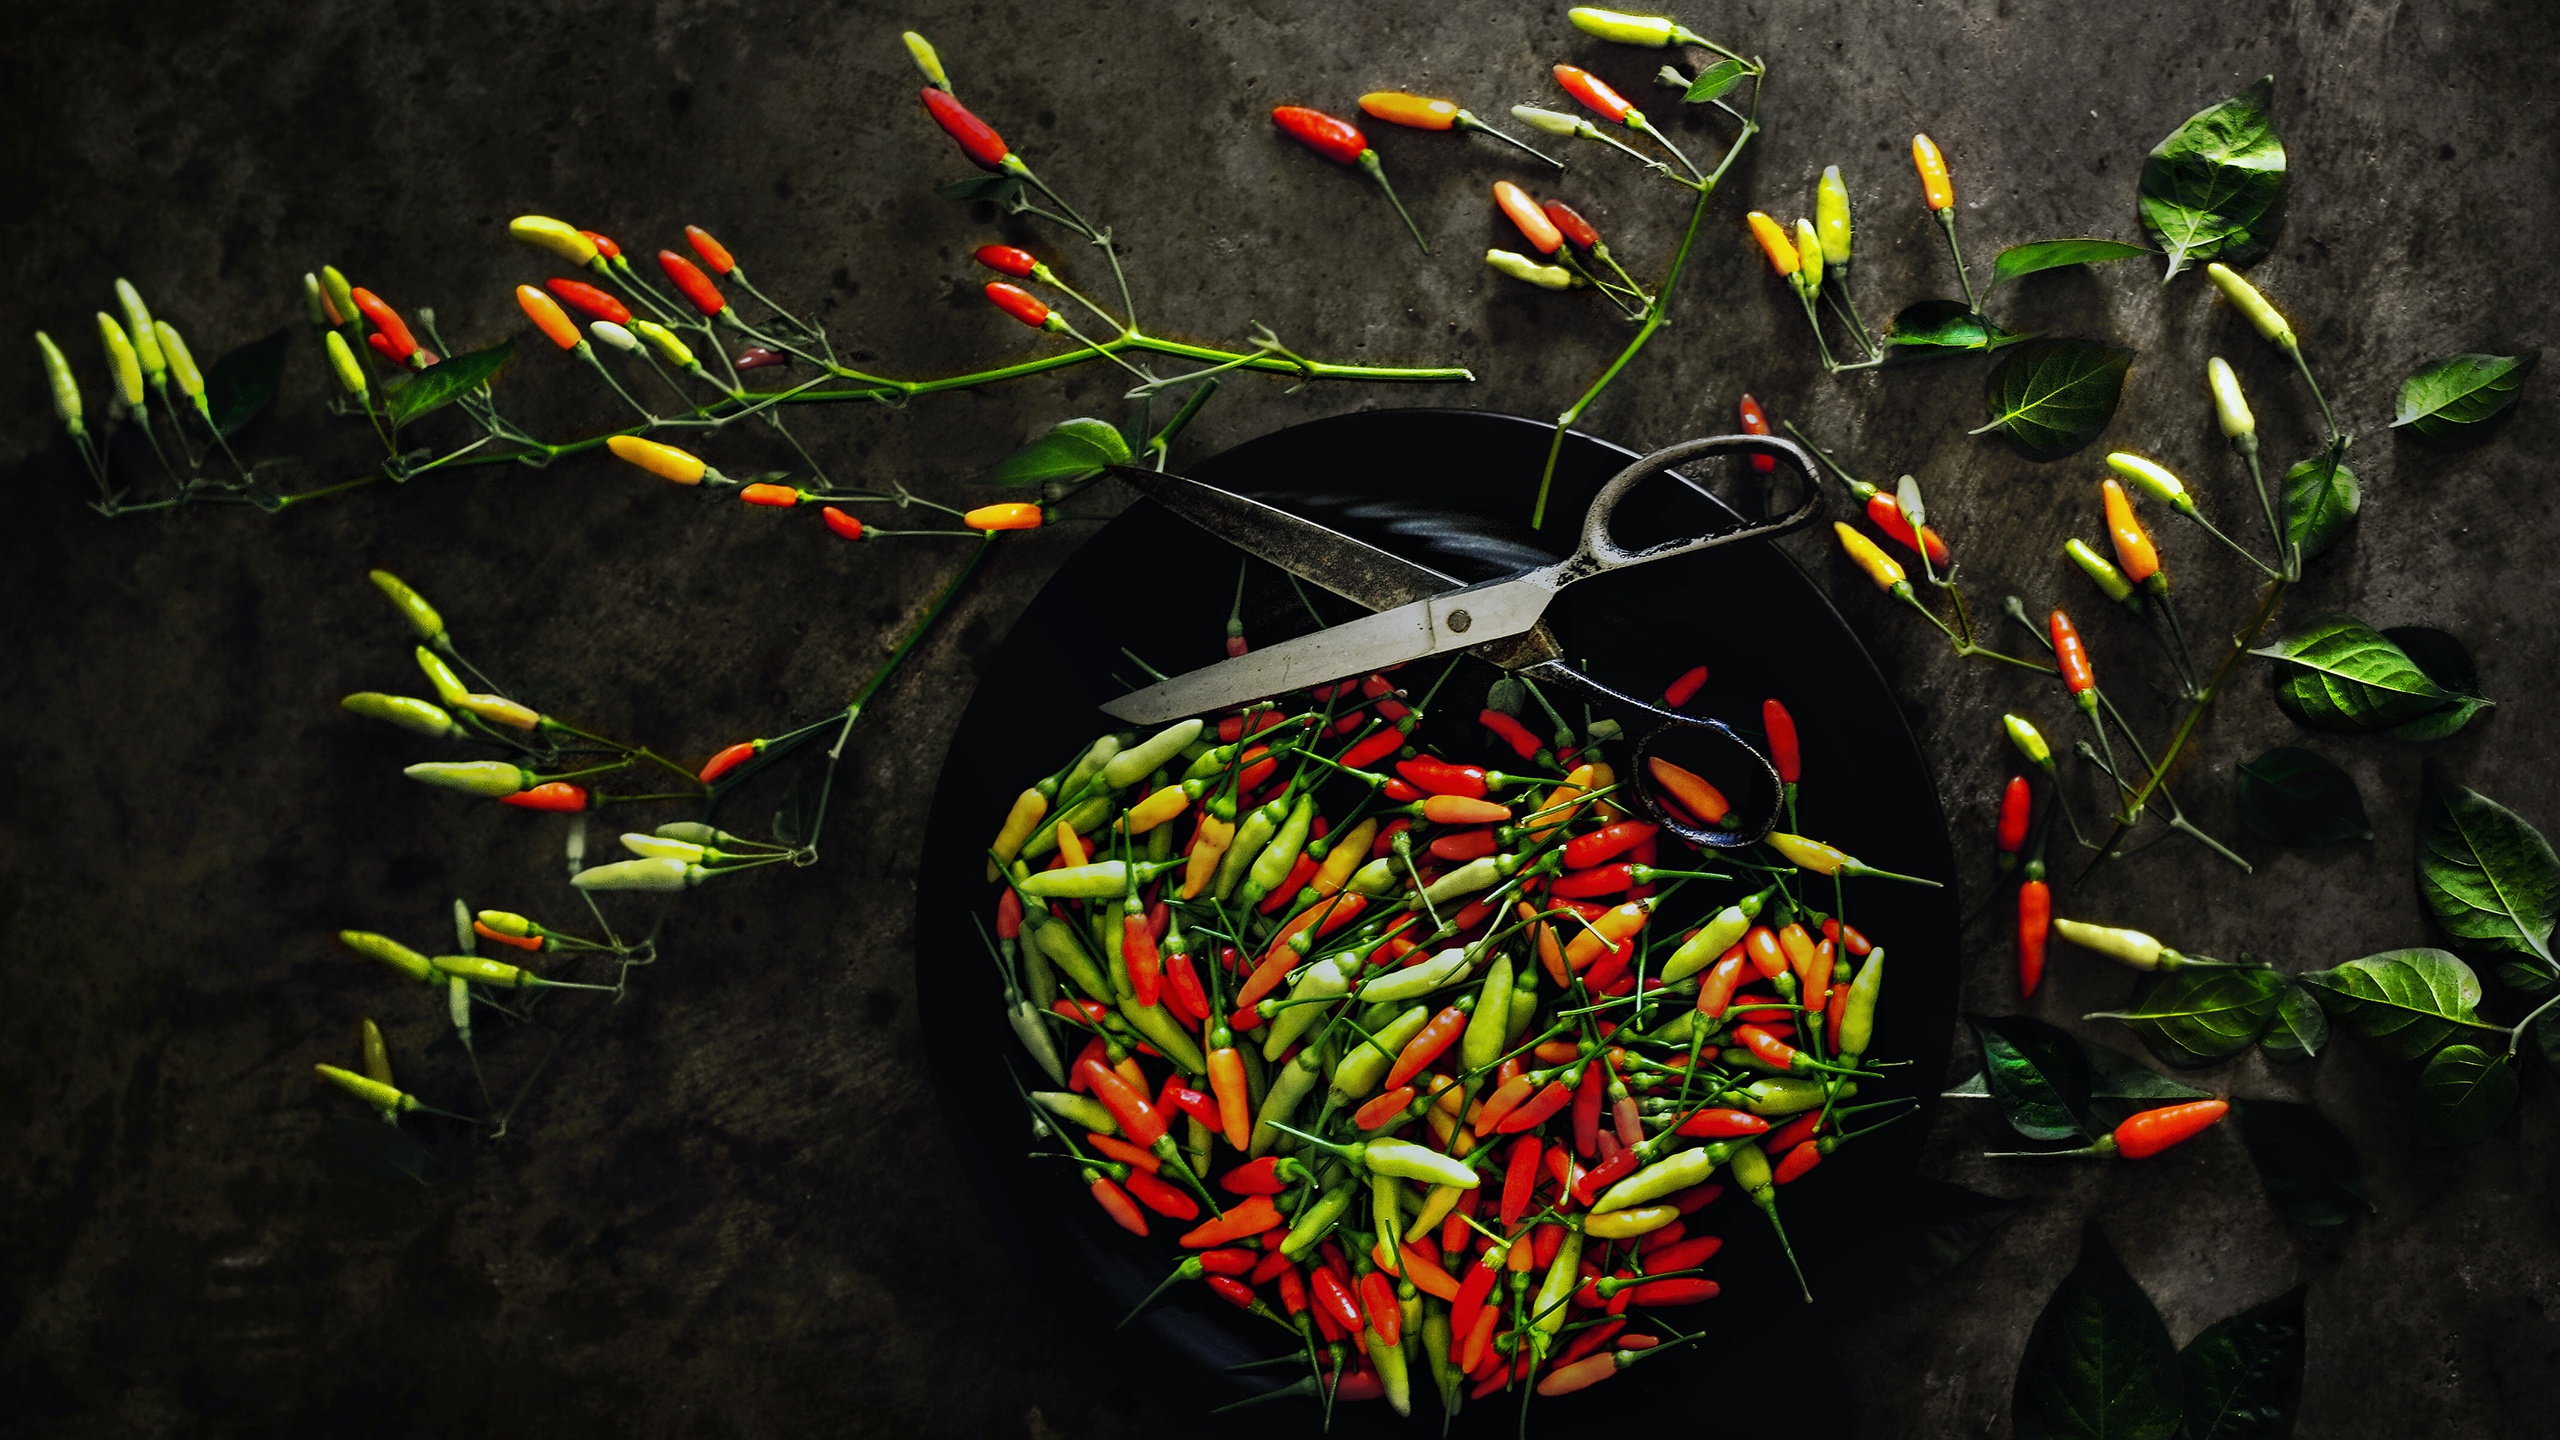 General 2560x1440 food scissors vegetables pepper chilli peppers closeup